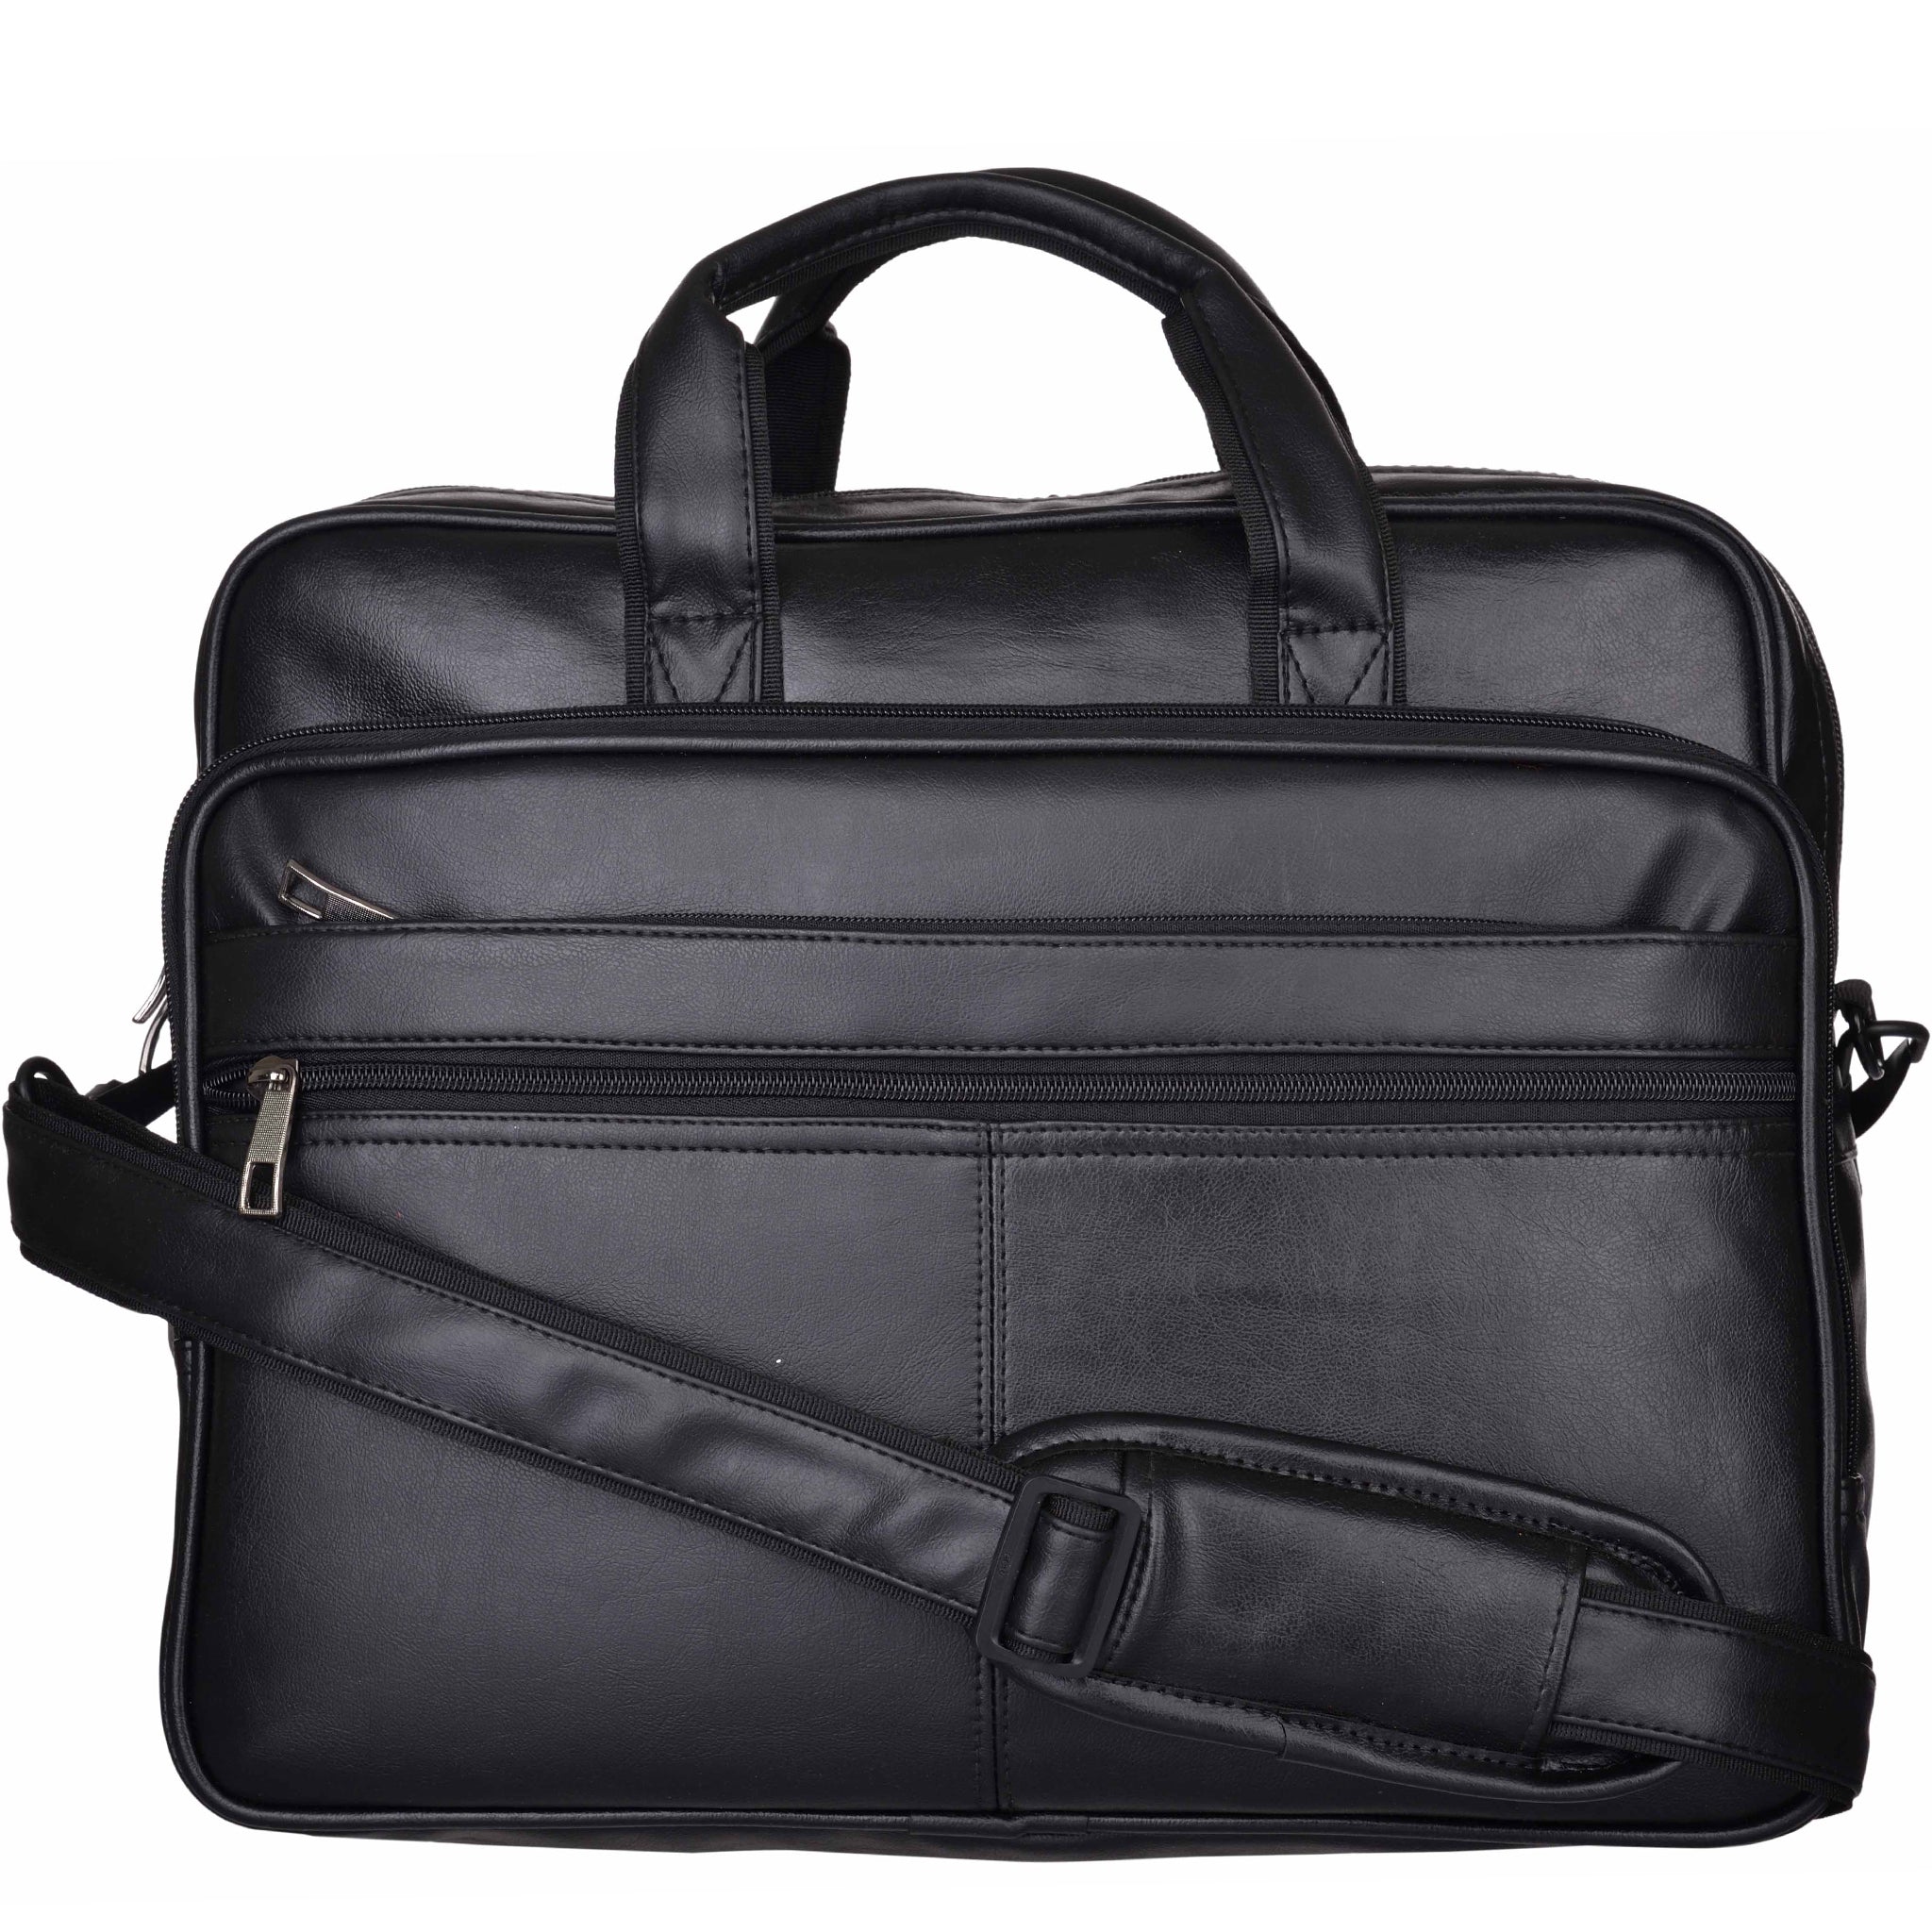 Hamilton leather crossbody bag Michael Kors Beige in Leather - 40642025